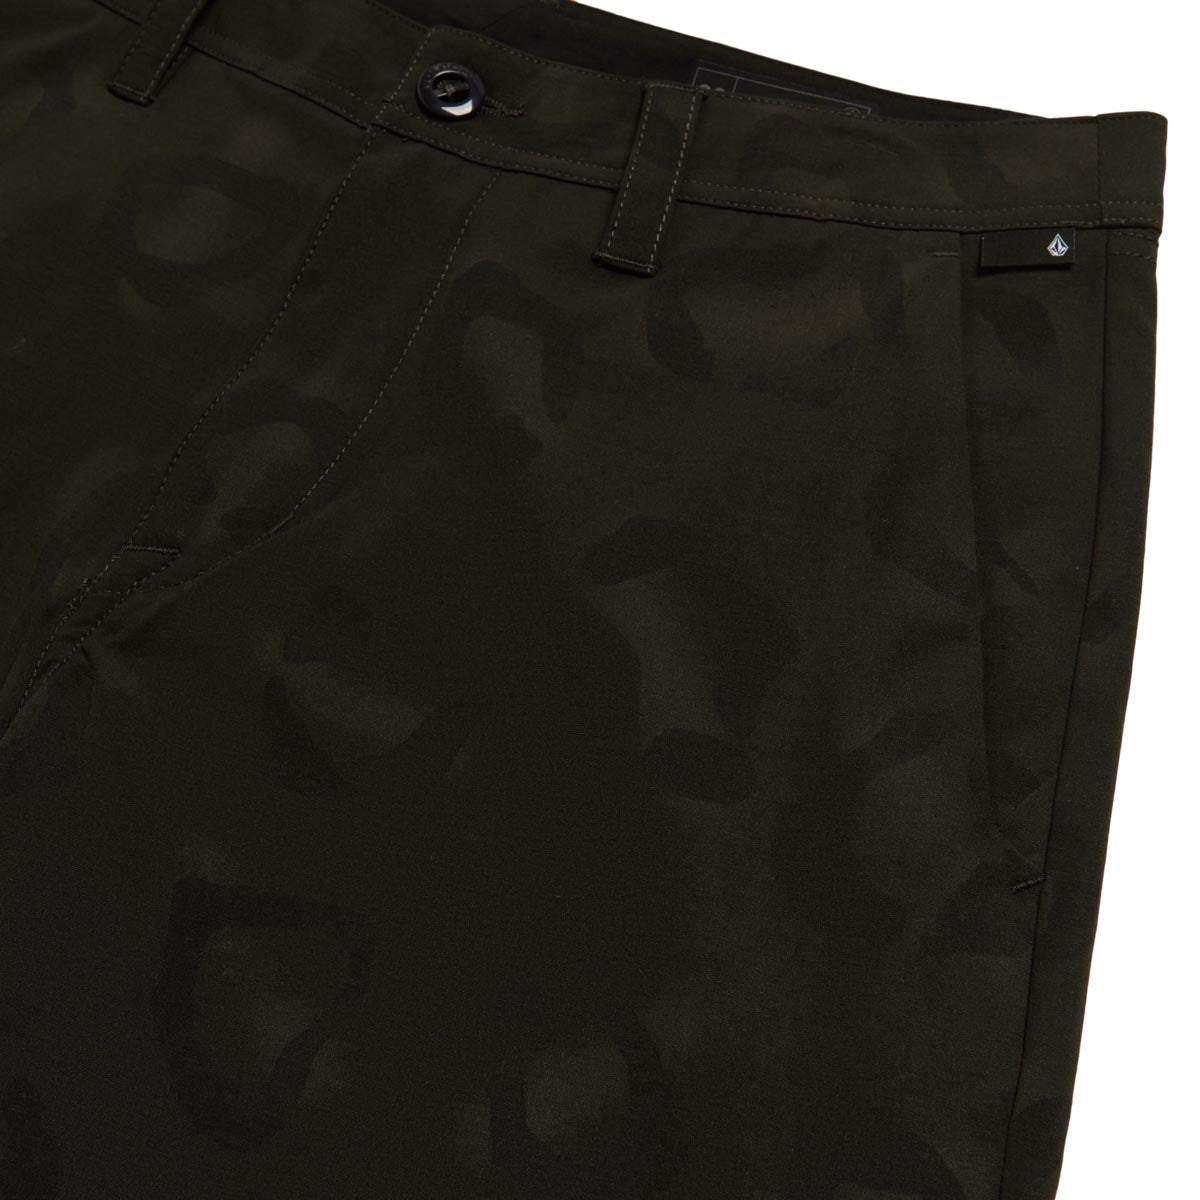 Volcom Mix Frickin Cross Shred 20 Shorts - Rinsed Black image 3